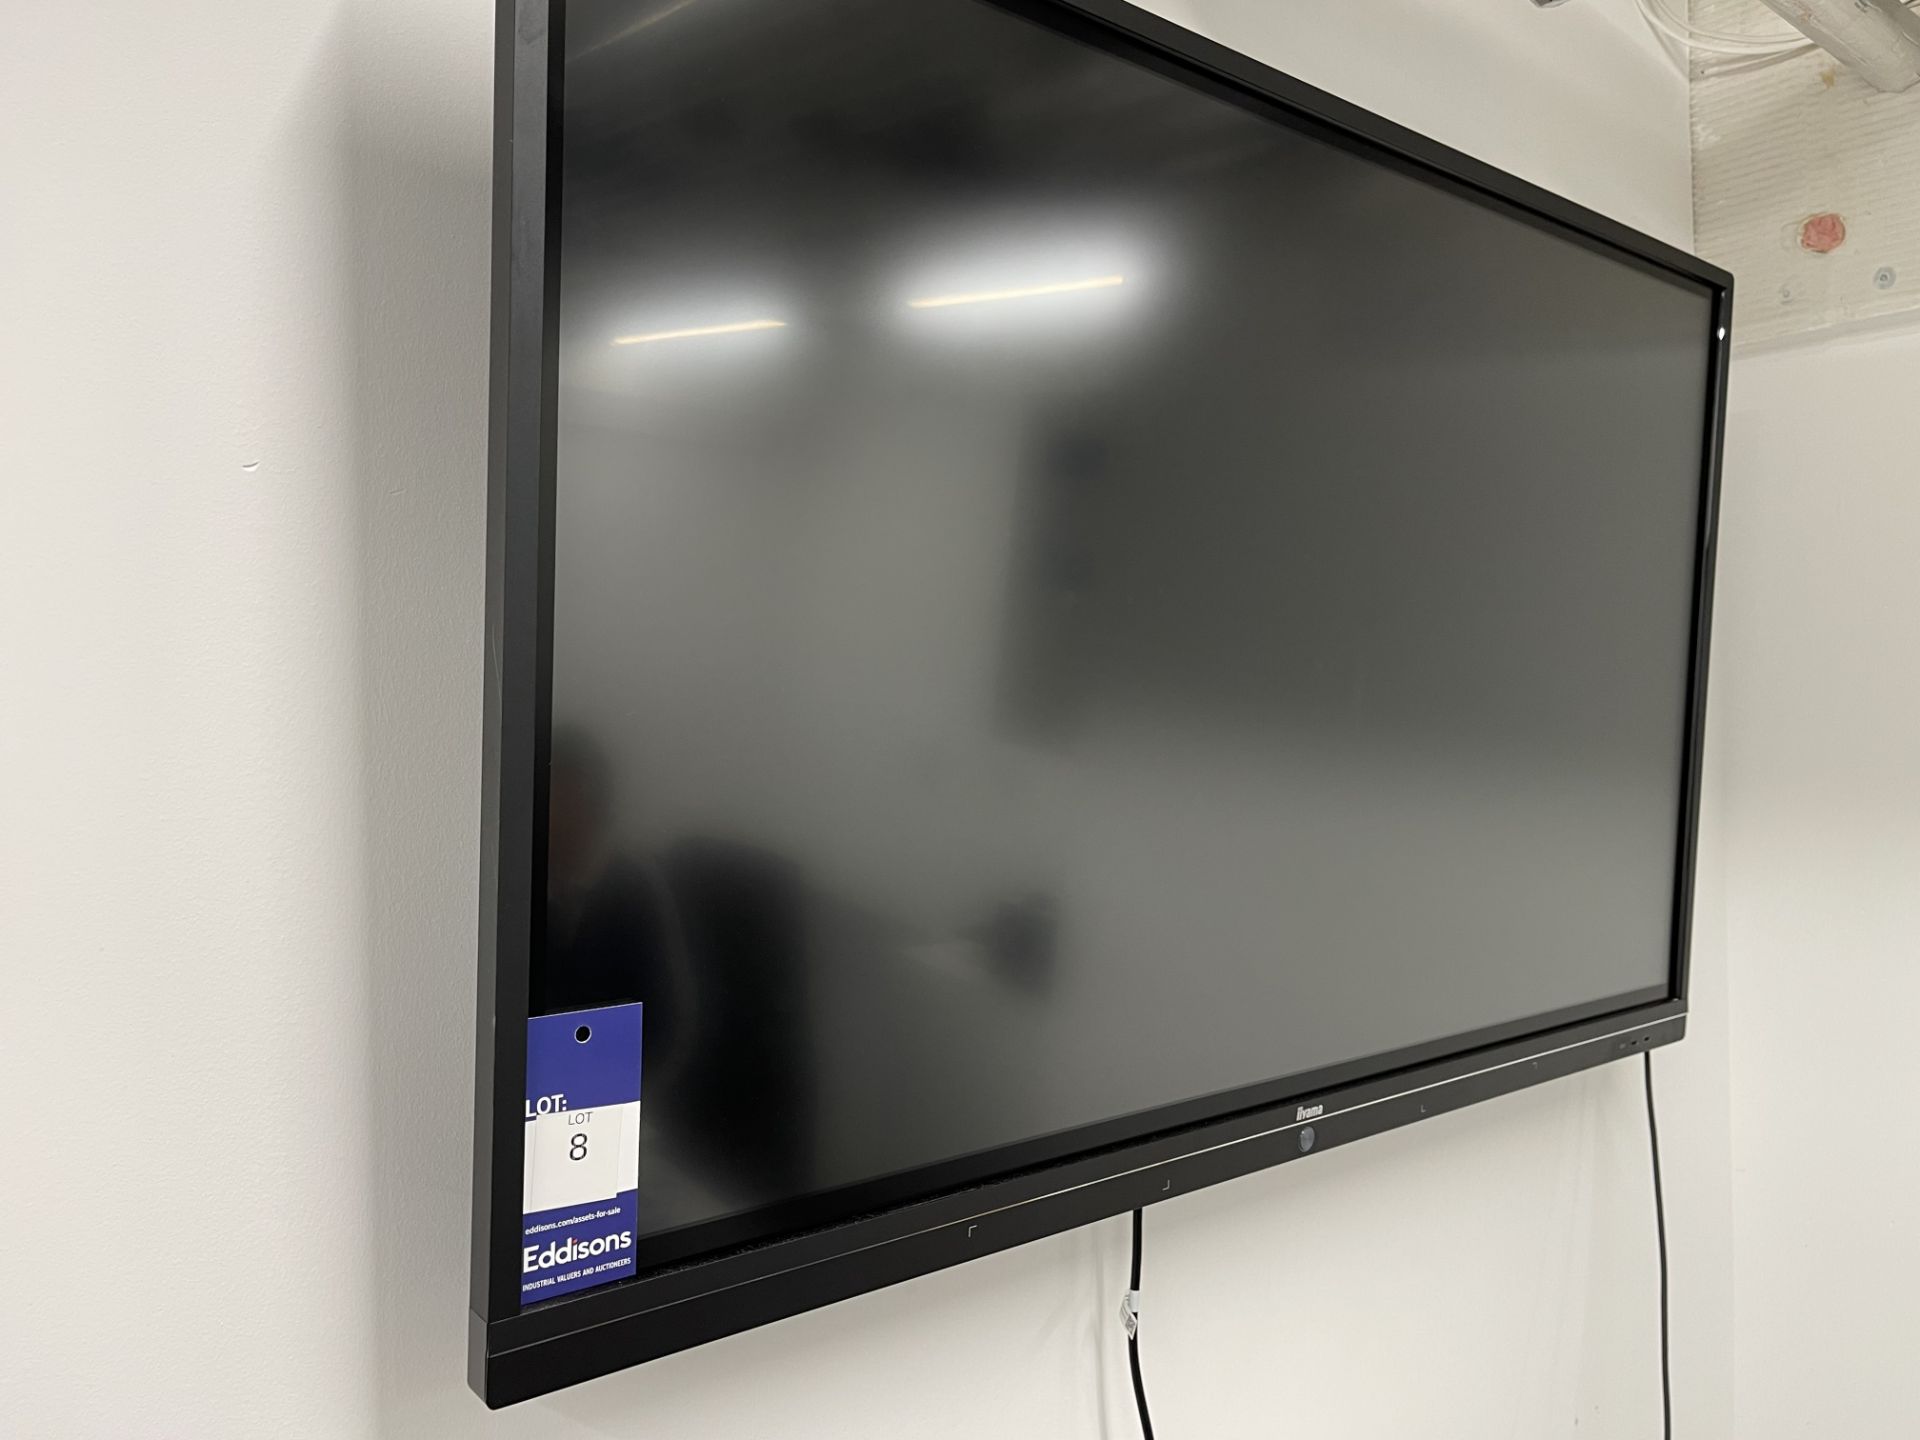 IIyama 55” flat screen monitor with remote